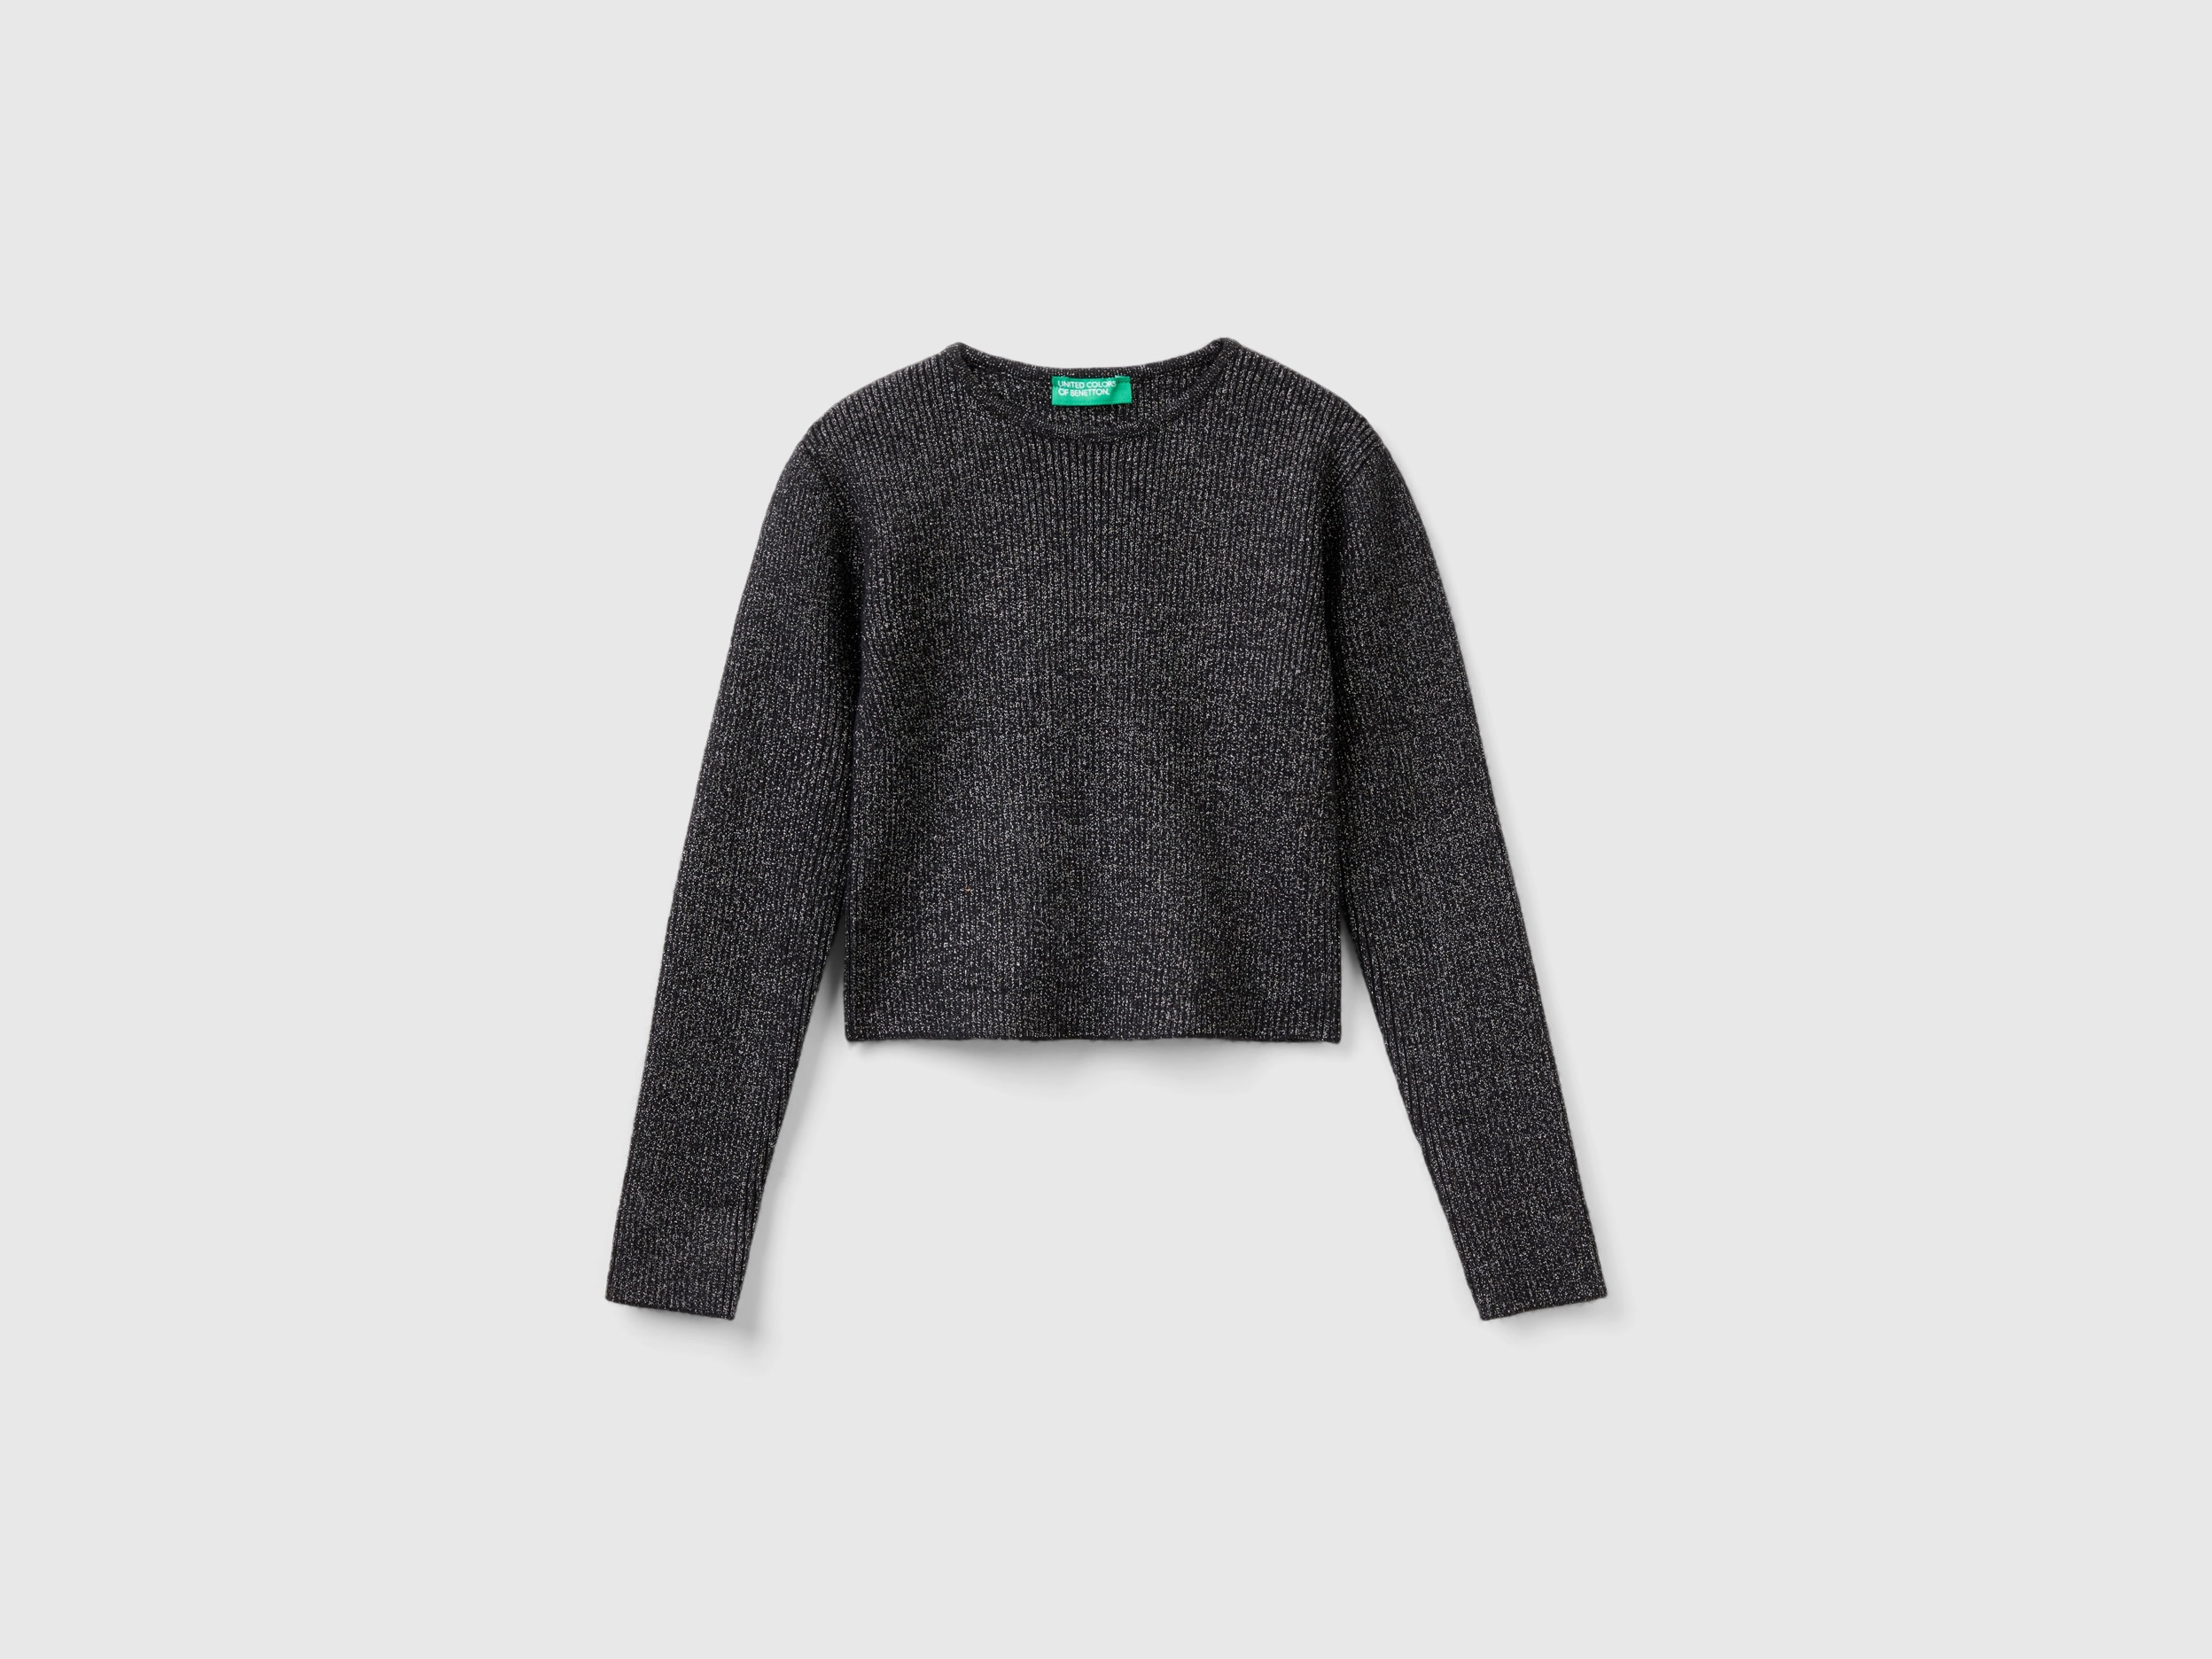 Benetton, Sweater With Lurex, size 2XL, Black, Kids